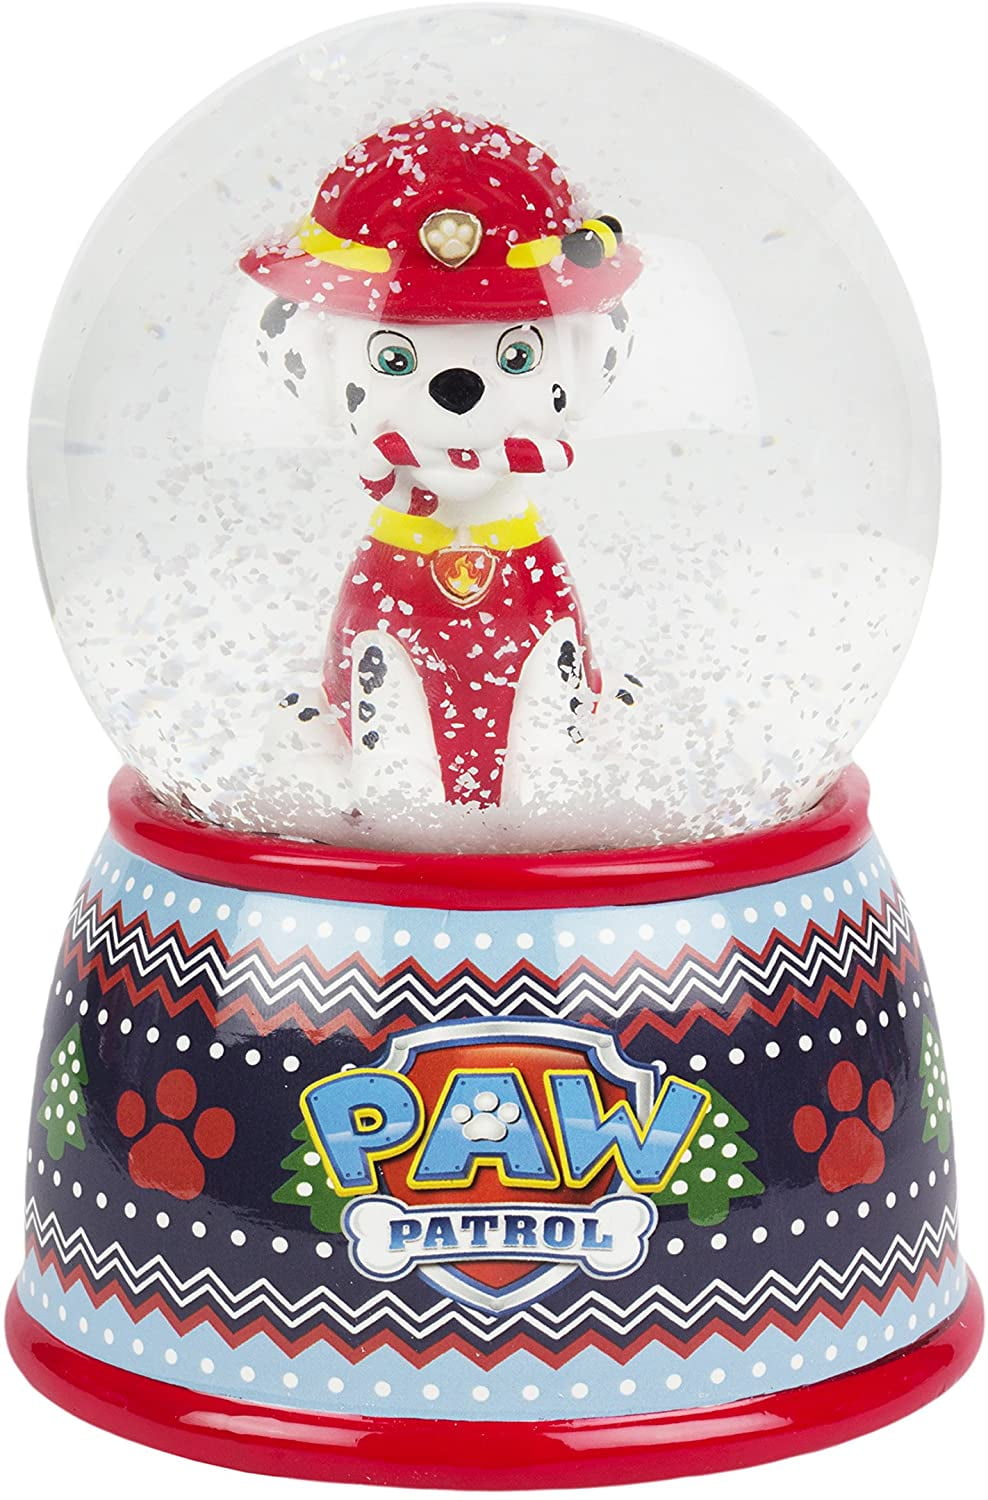 SNOWGLOBE ~ ROCKY Paw Patrol ~ Shatterproof Plastic Handmade Snow Globe Toy Christmas